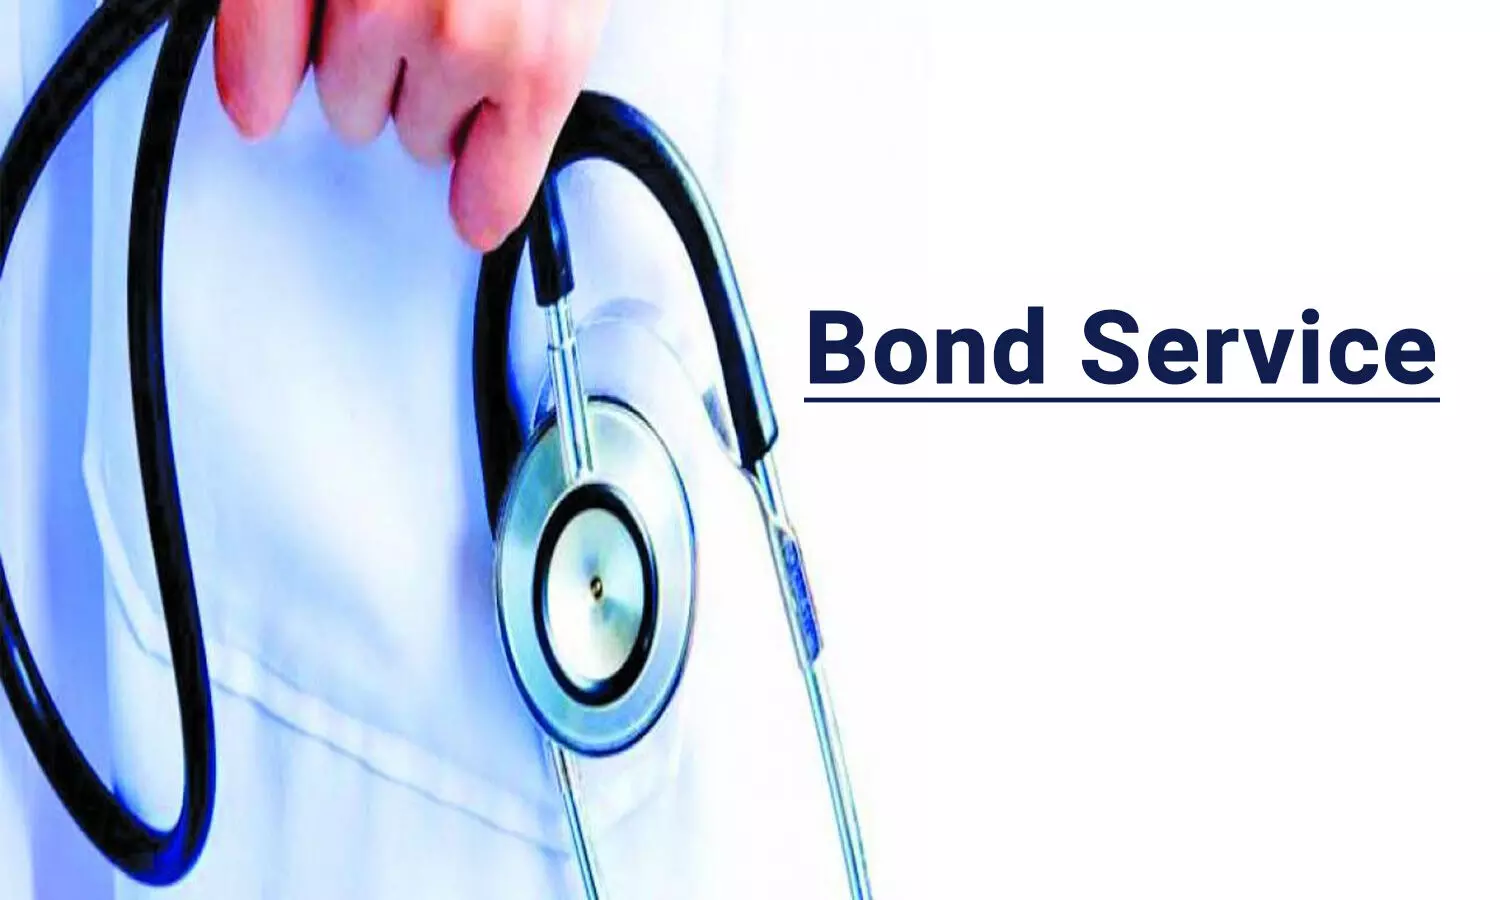 Bond service of PG Medical Students of MUHS Summer 2020 Batch extended: DMER